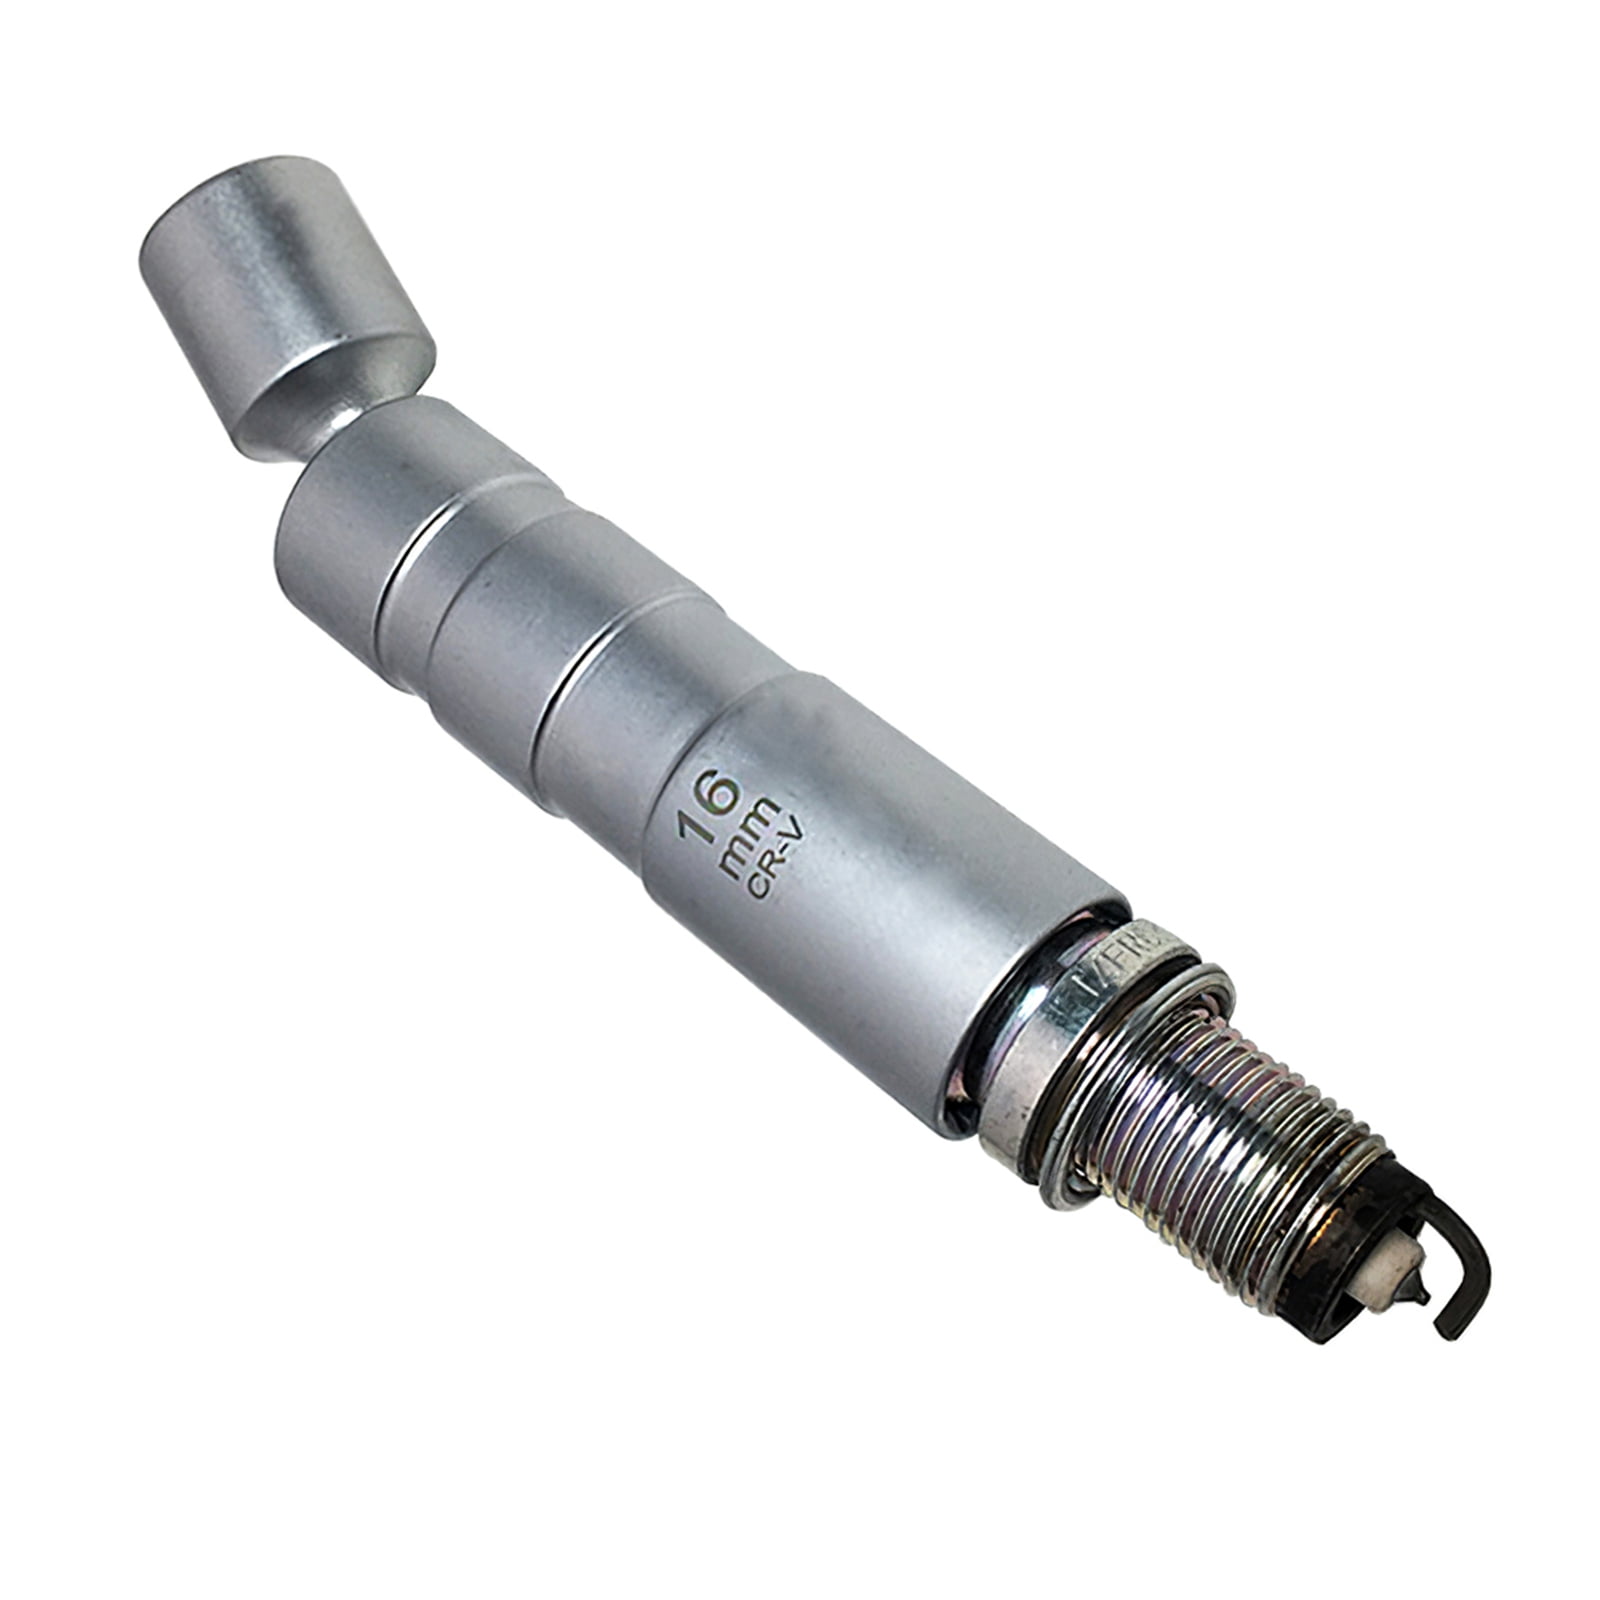 16mm Long Spark Plug Socket Magnetic Removal Tool Chrome Vanadium Alloy Steel 